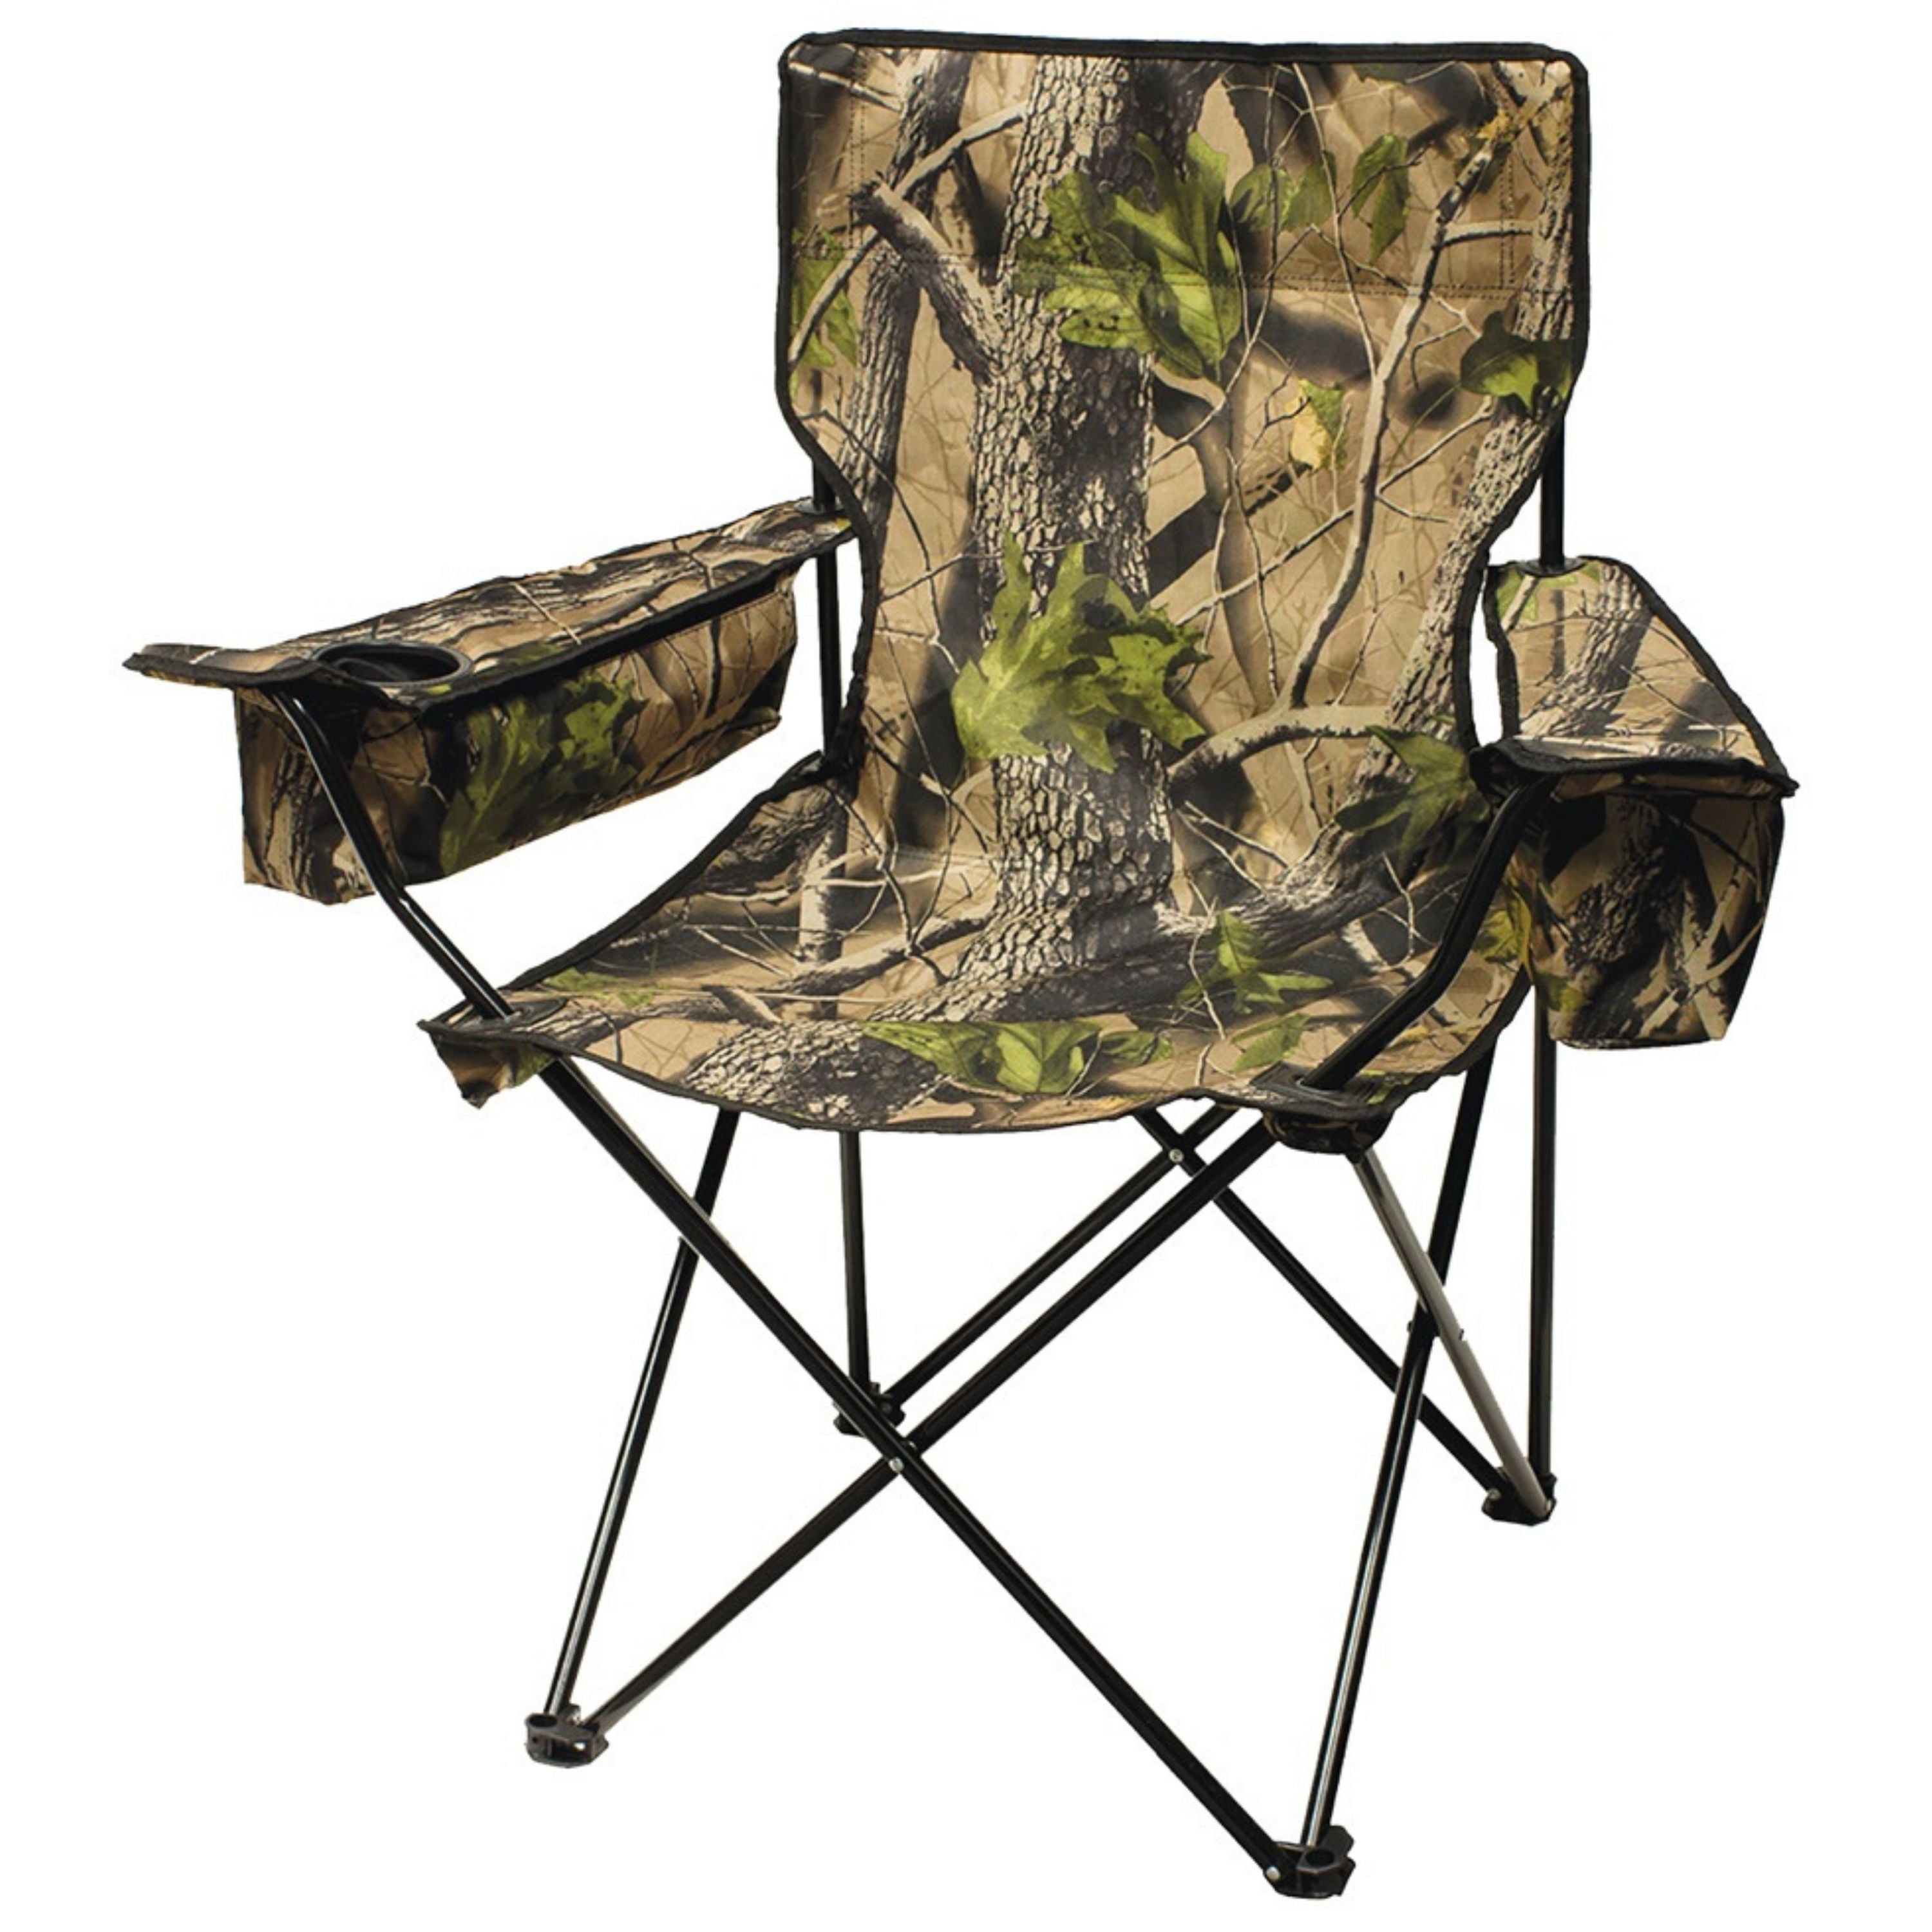 Chaise pliante “Uniflage”||"Uniflage" folding chair